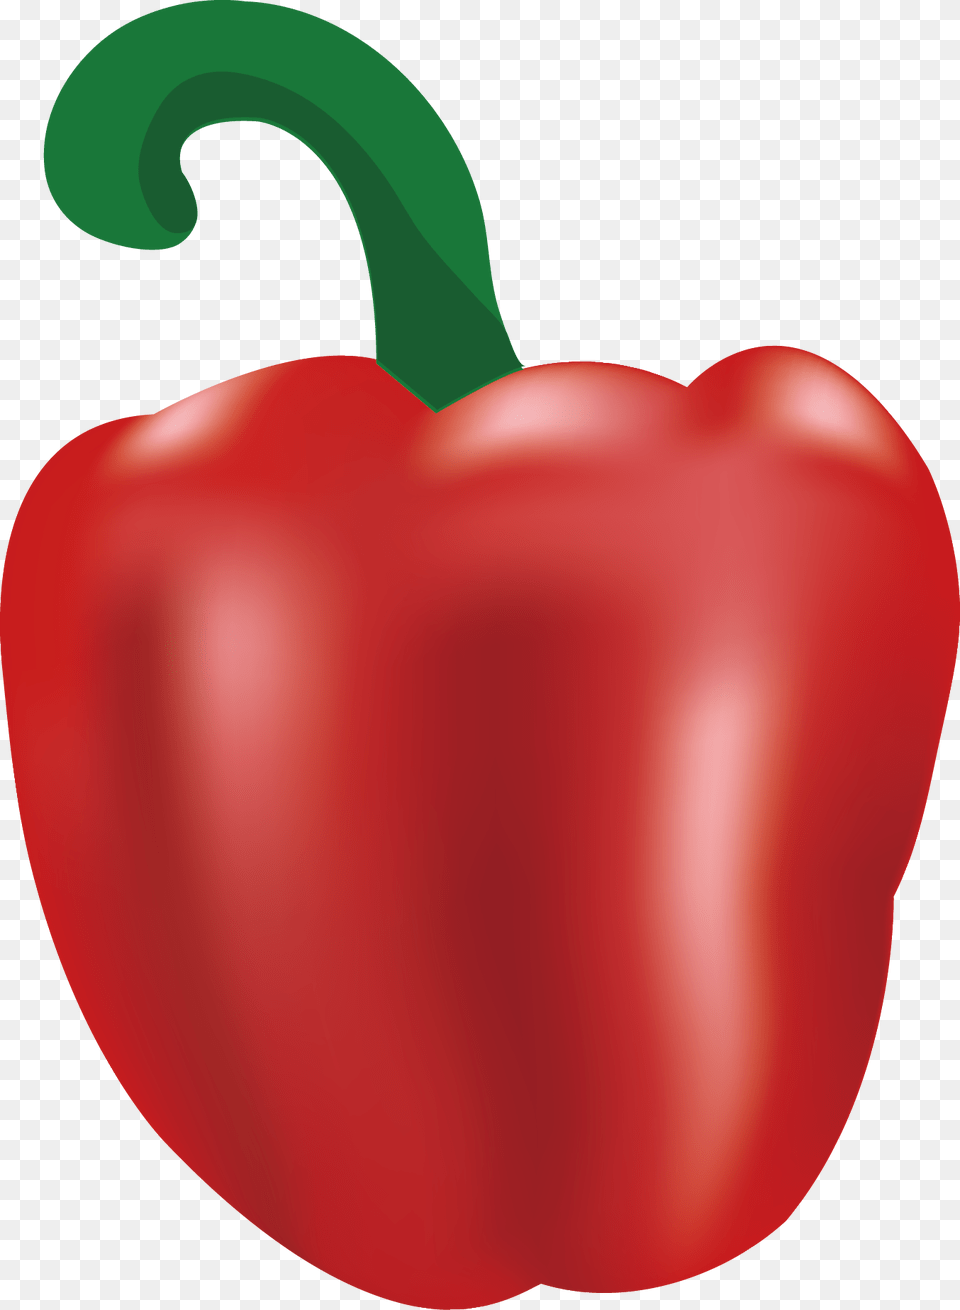 Chili Pepper Bell Pepper Vegetable Illustration, Bell Pepper, Food, Plant, Produce Free Transparent Png